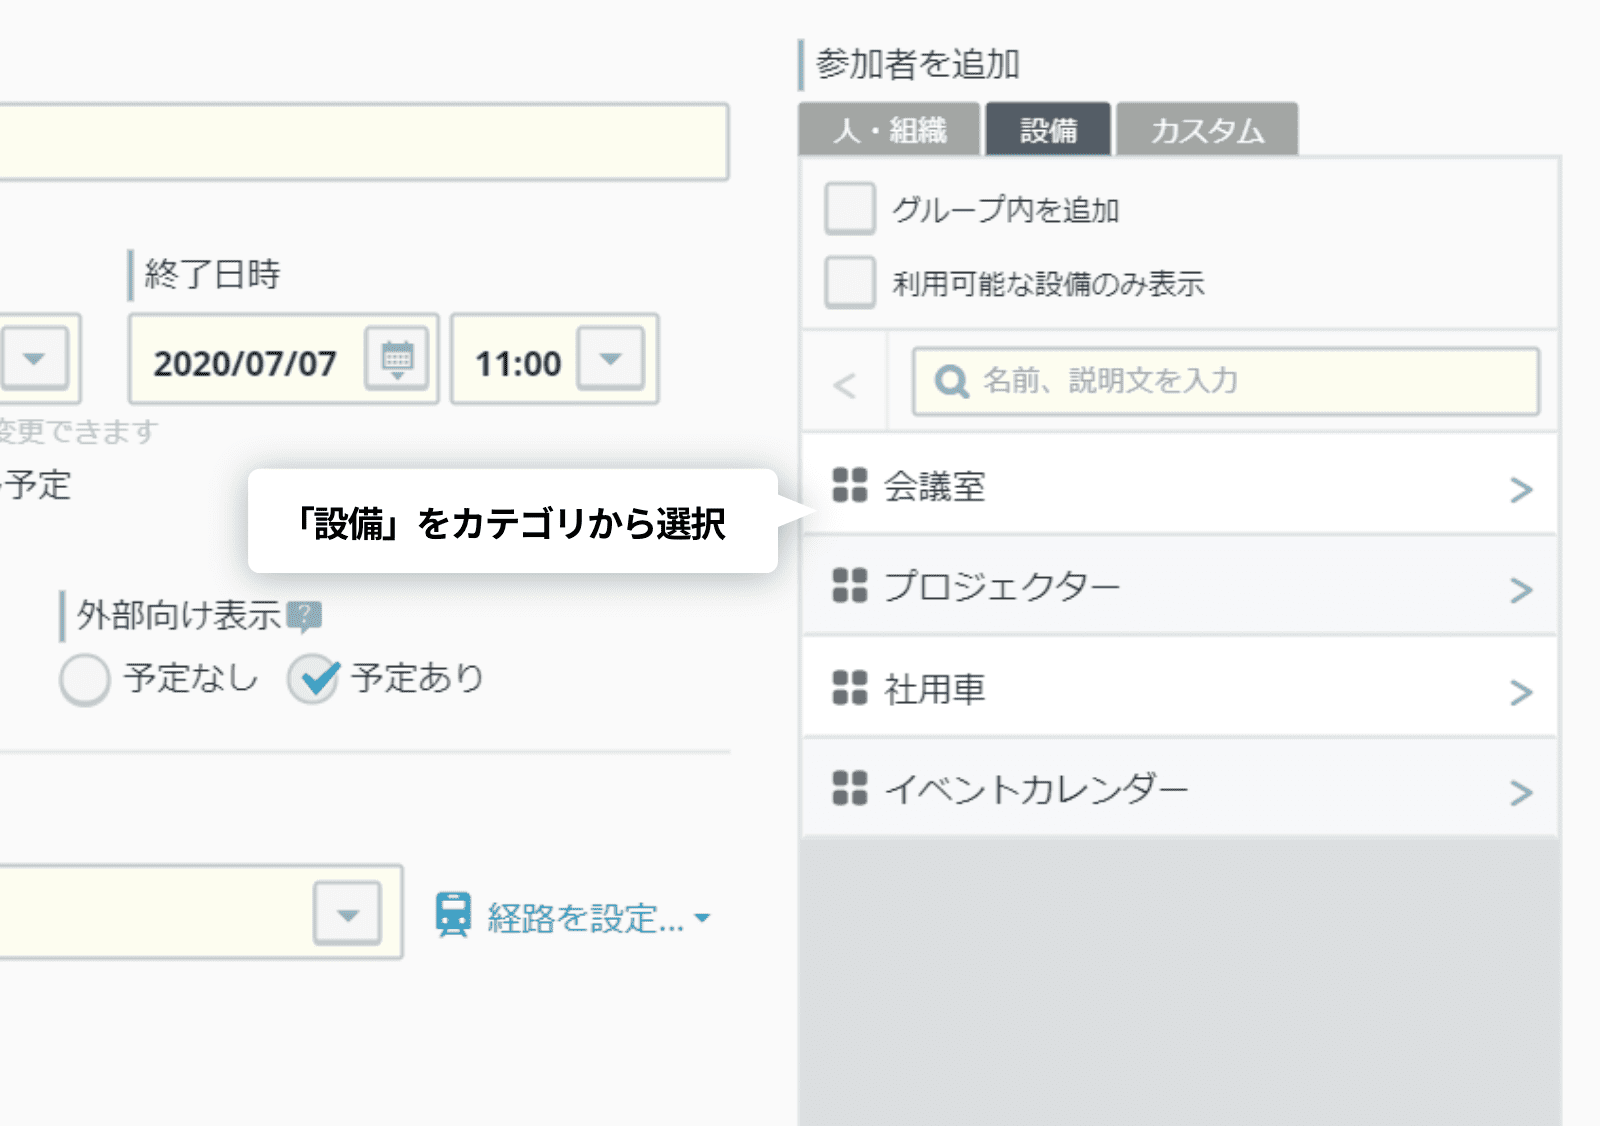 rakumo カレンダー 設備カテゴリー選択画面